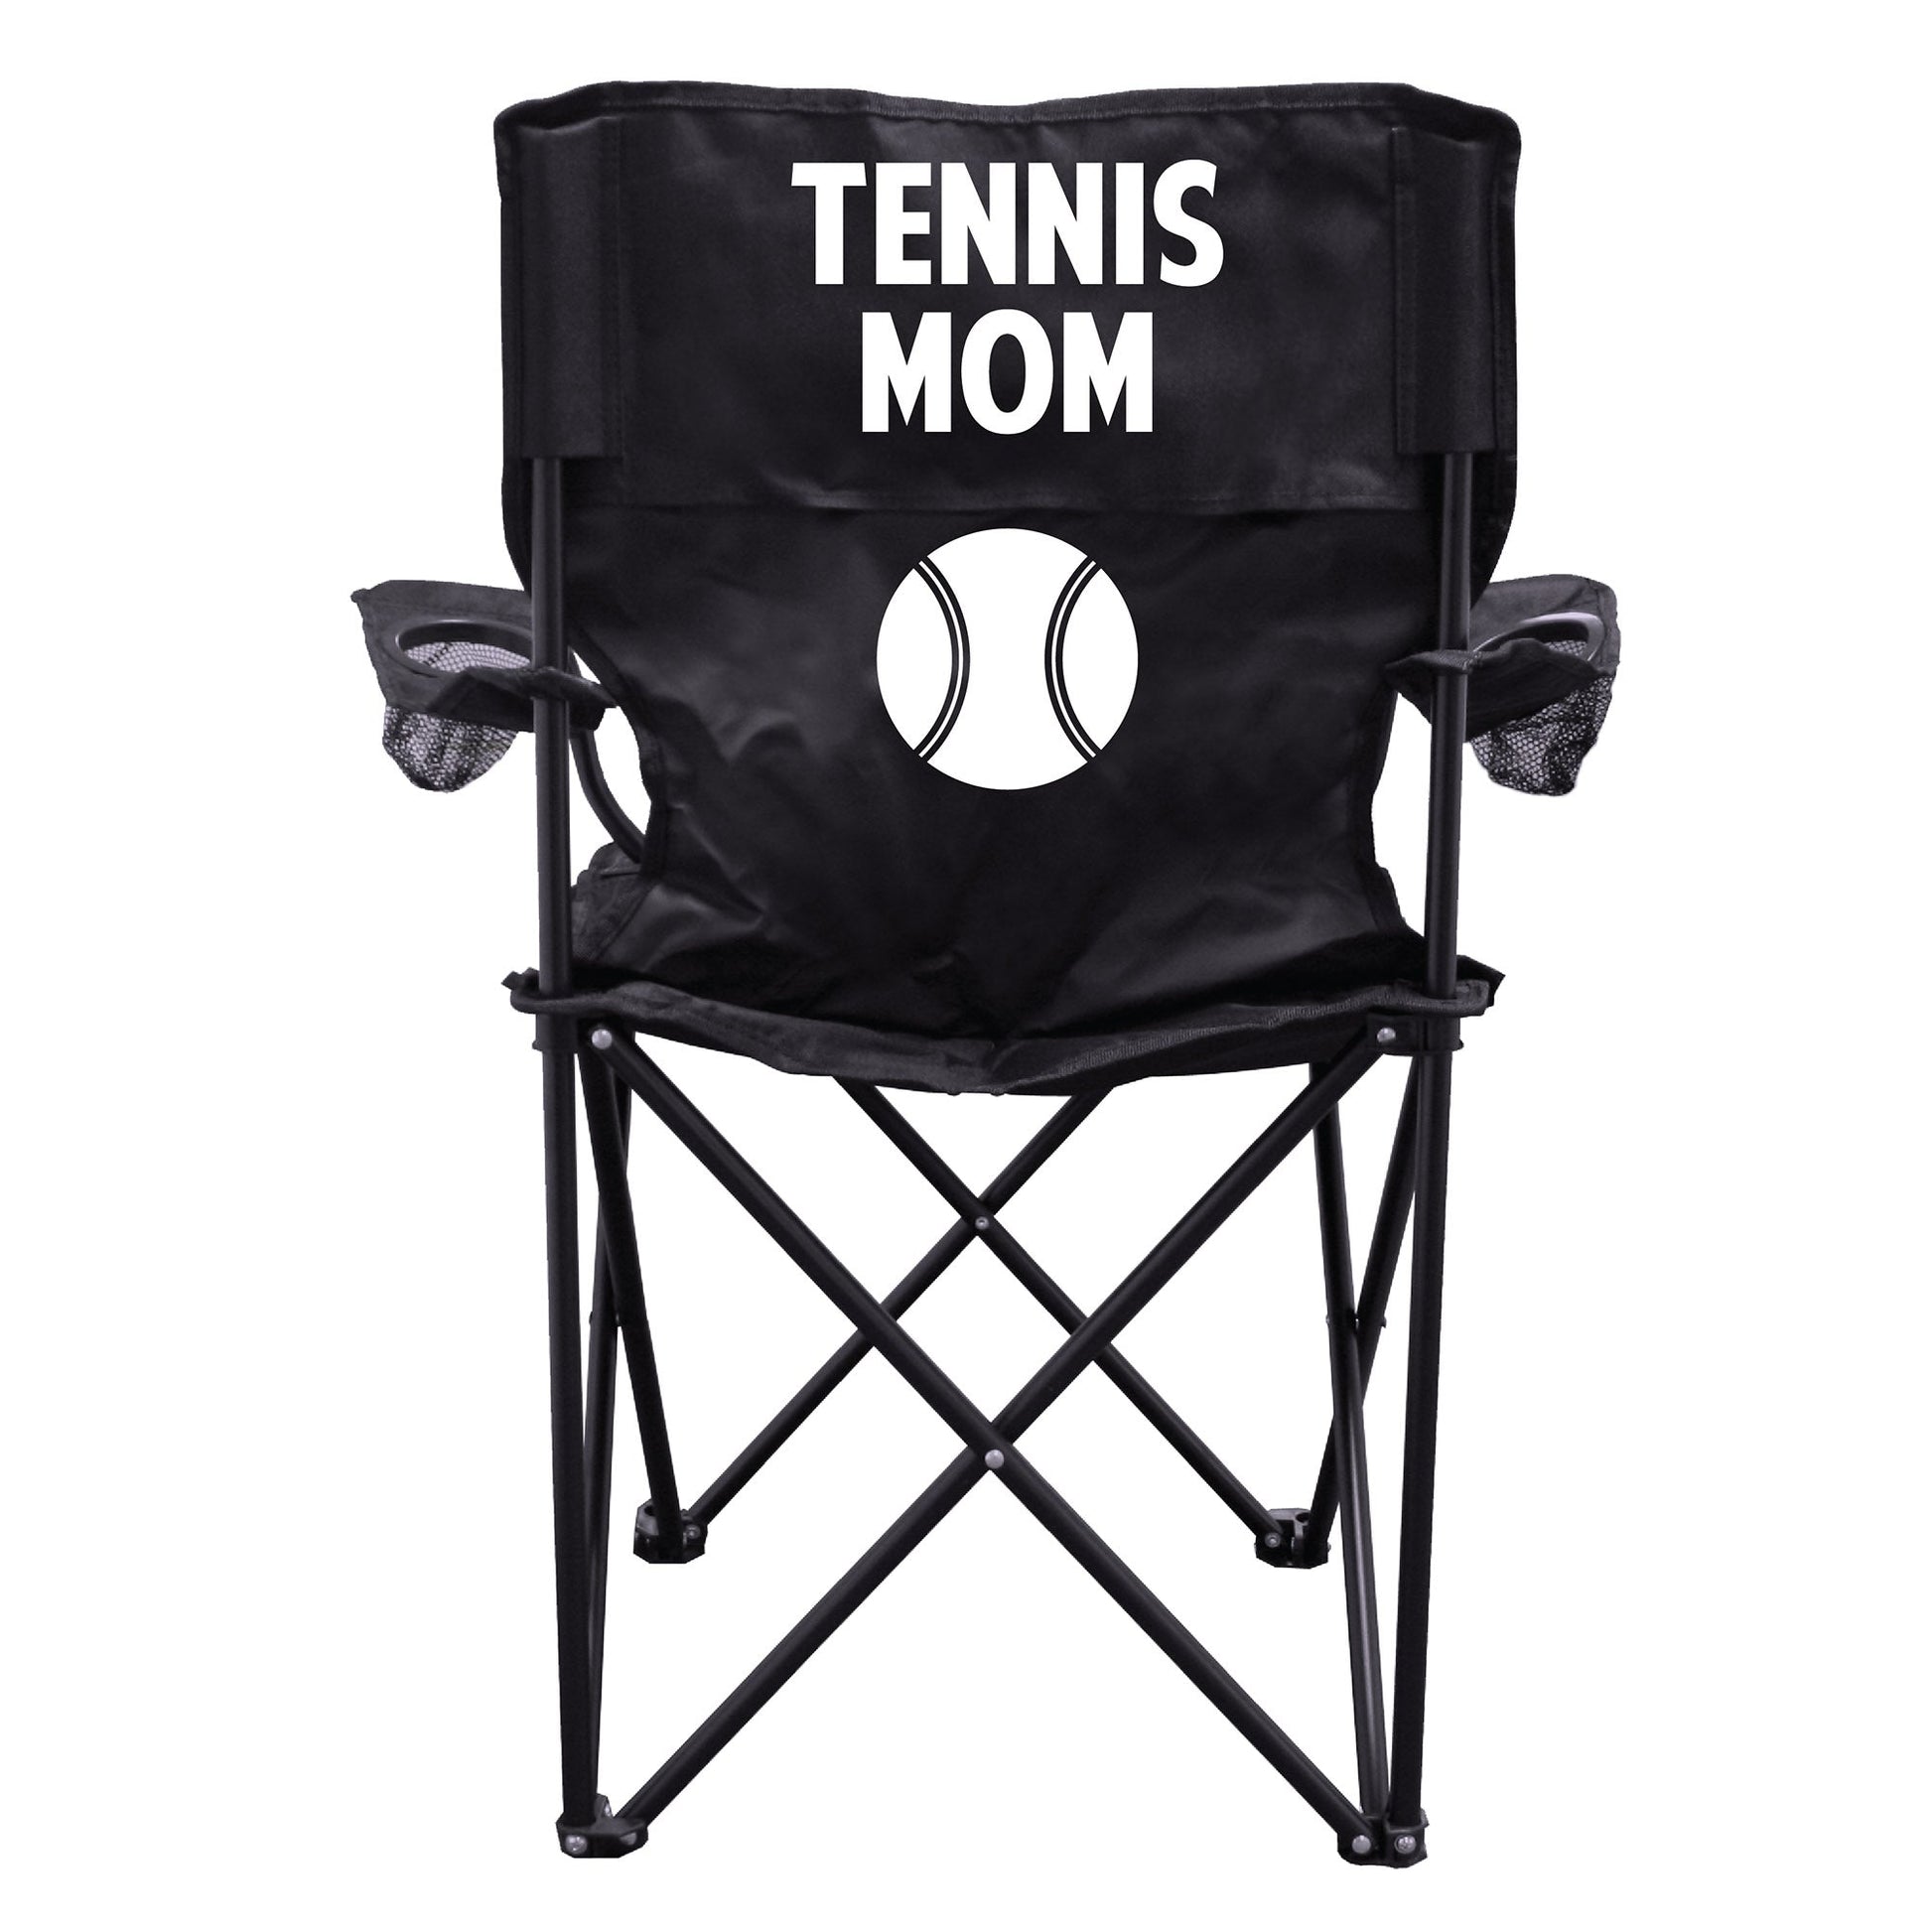 Tennis Mom Black Folding Camping Chair